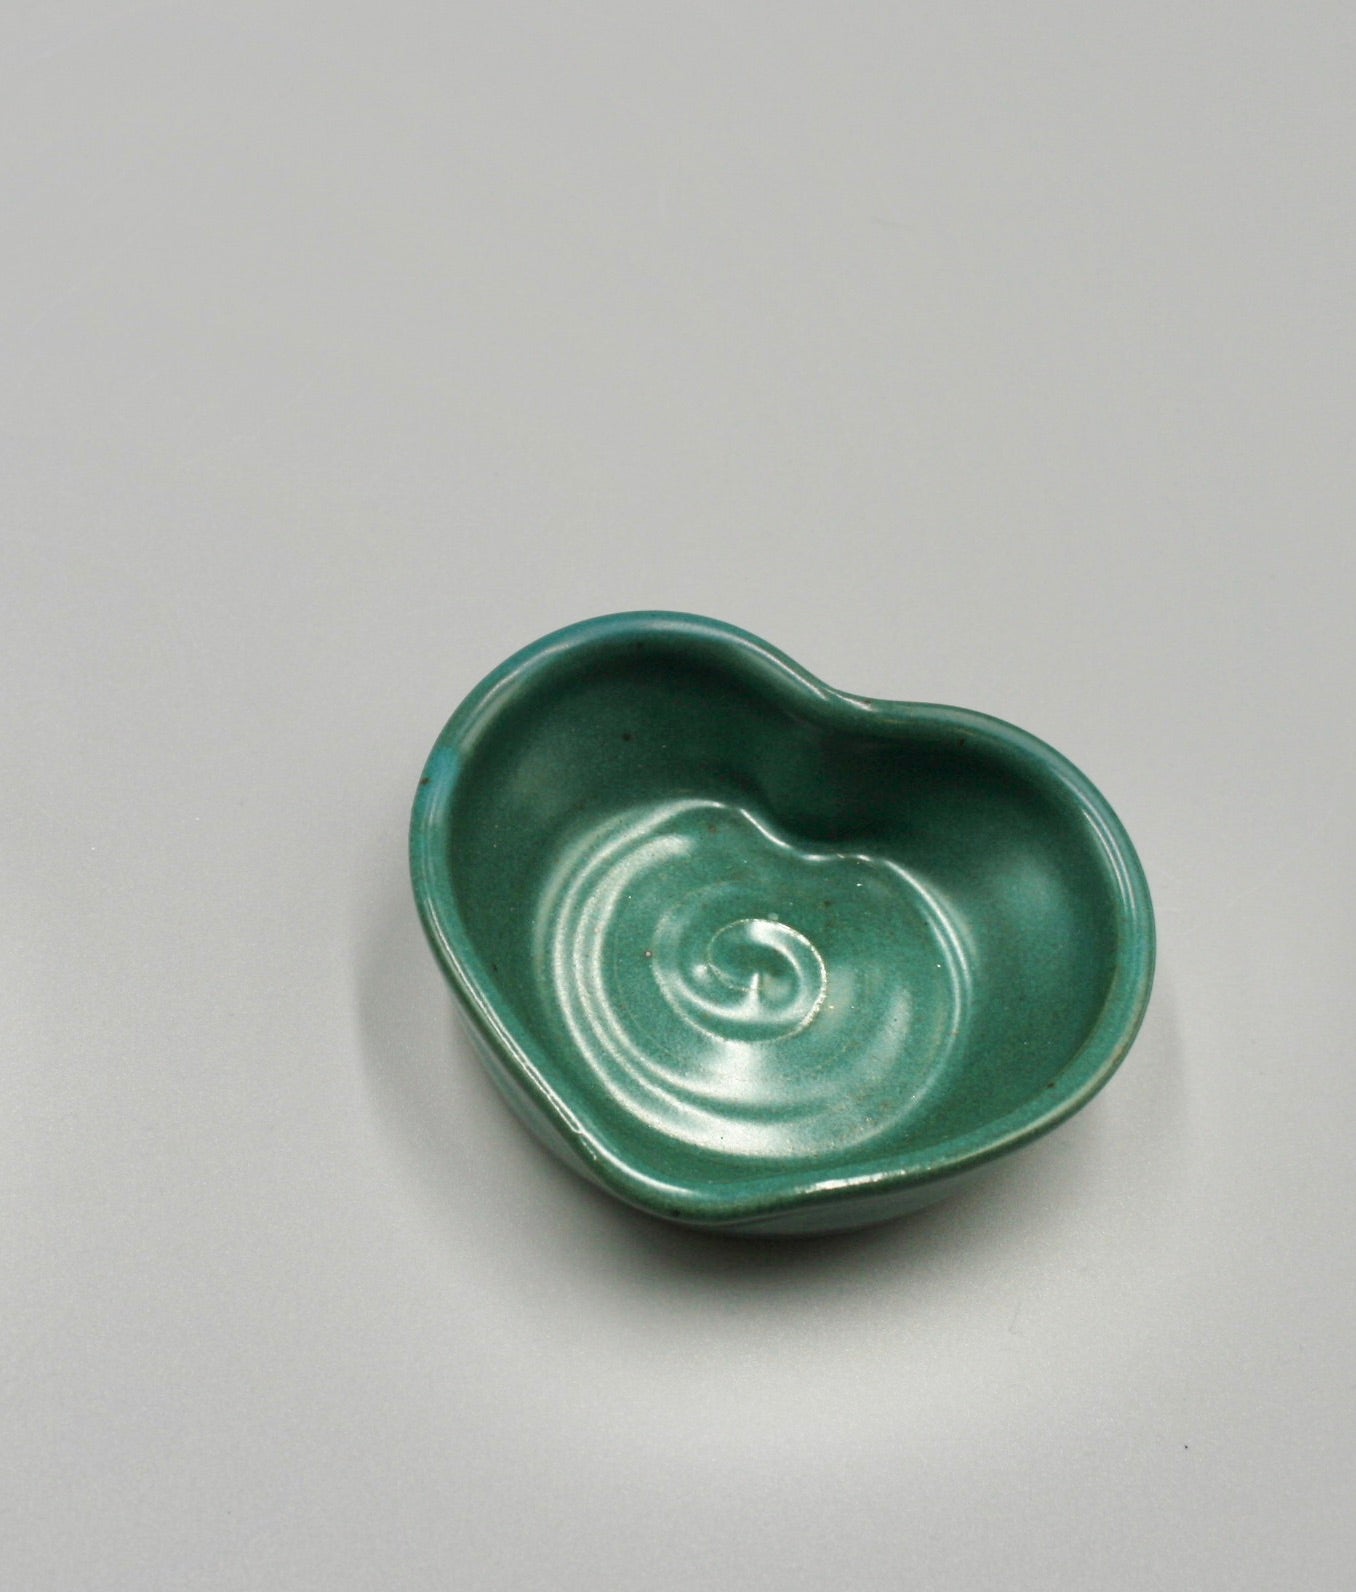 Papercut Pottery: Heart Shaped Bowl